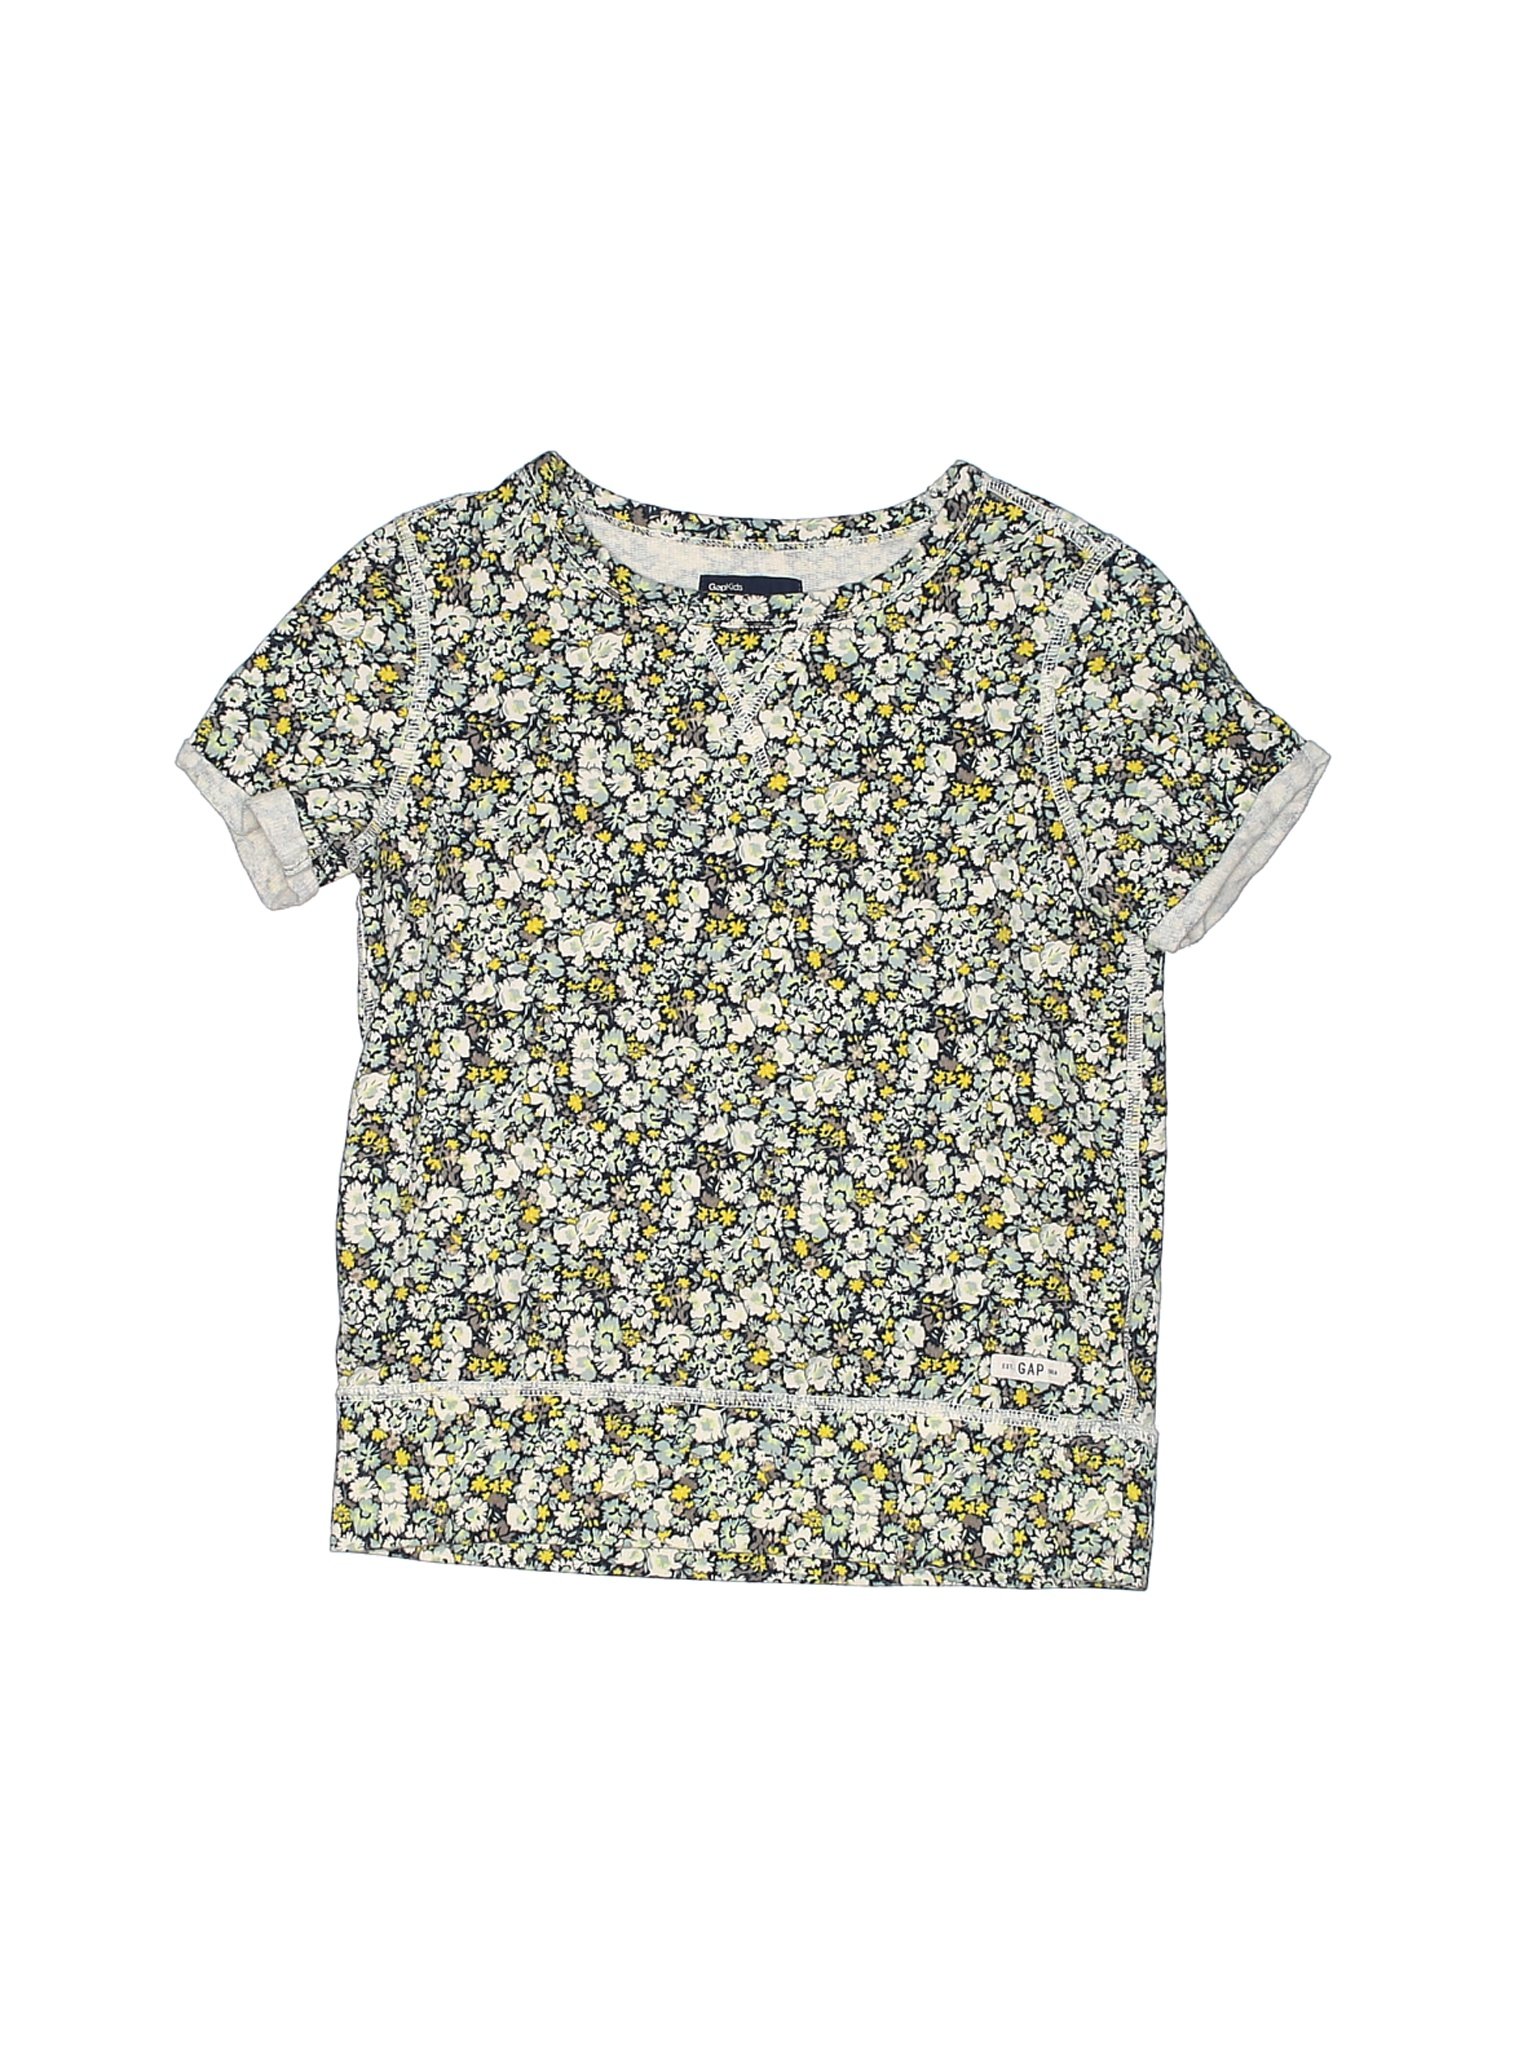 Gap Kids Girls Green Short Sleeve T-Shirt 8 | eBay